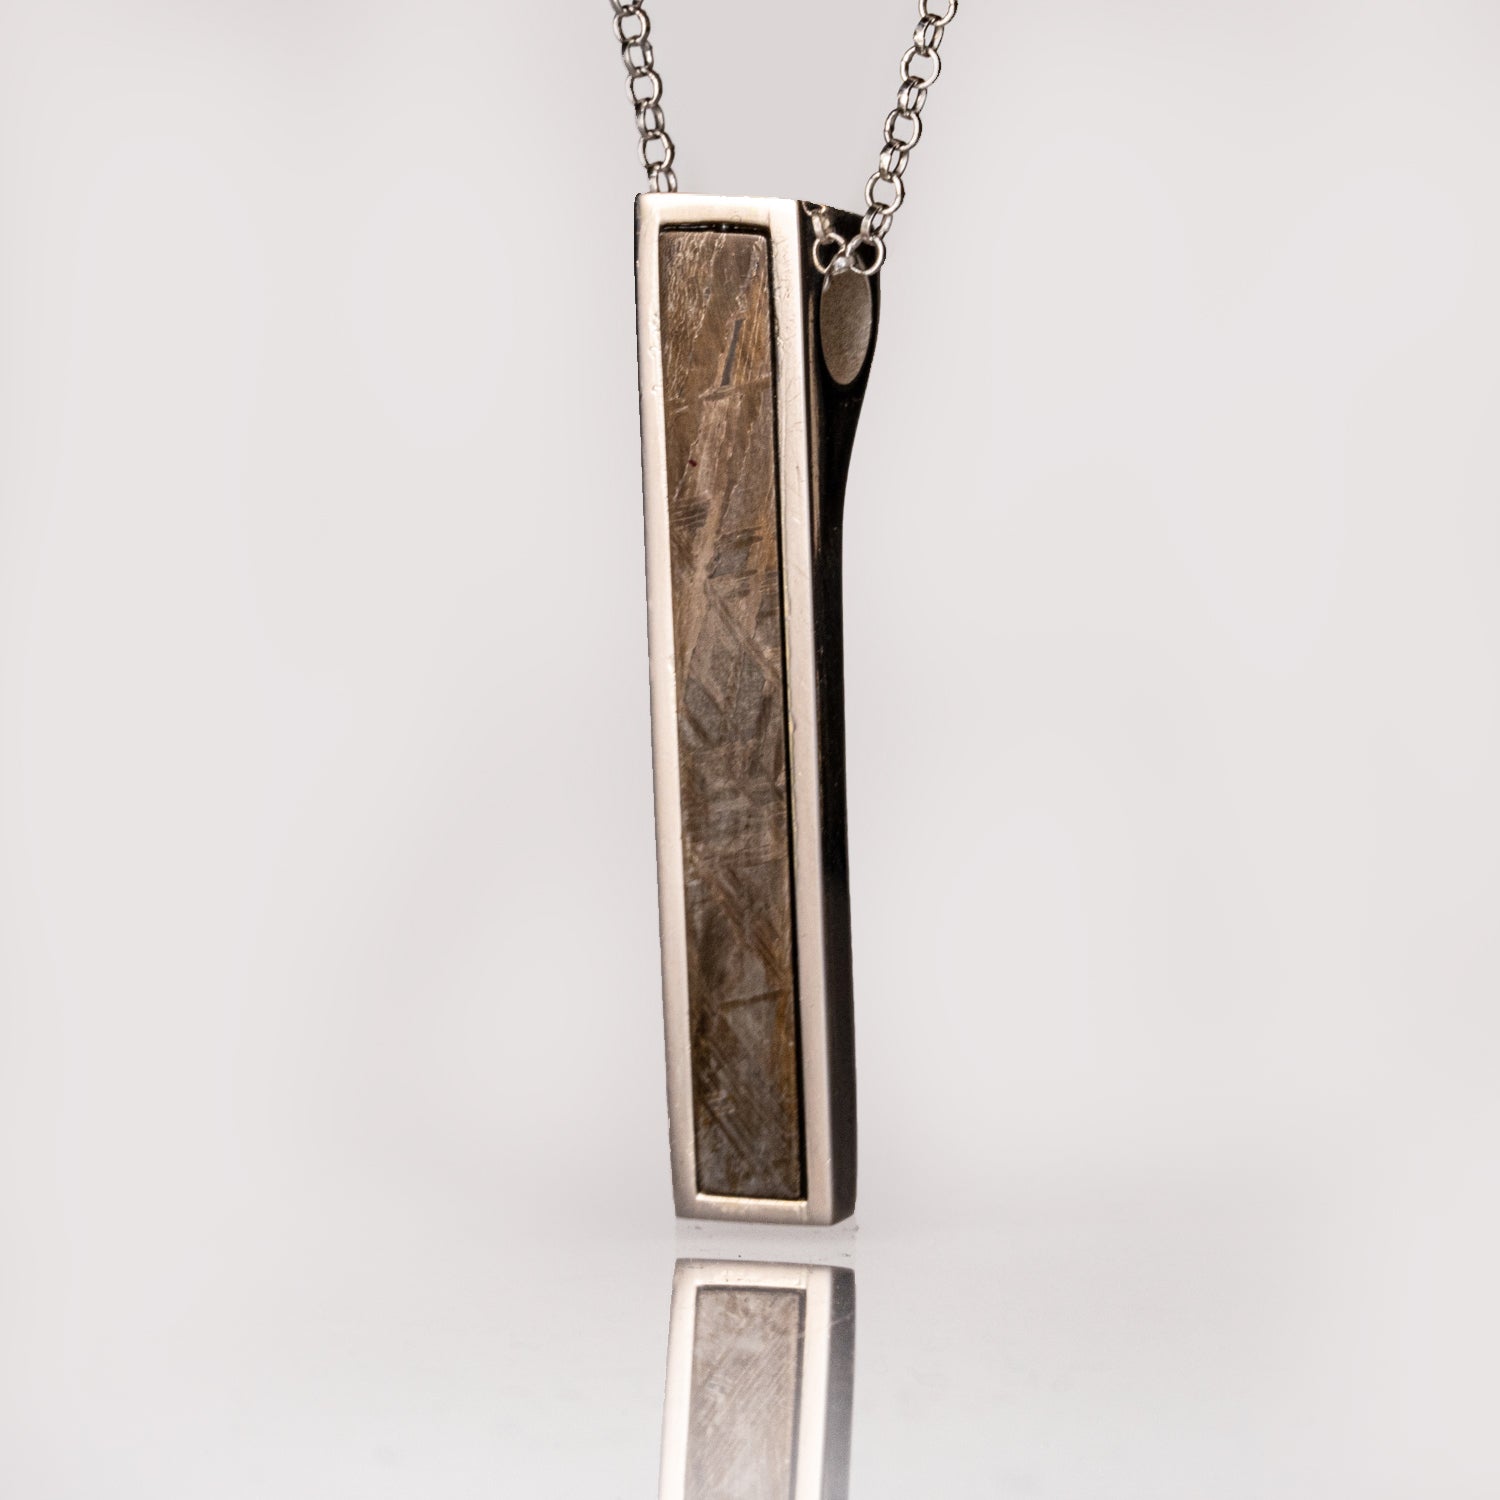 Genuine Seymchan Meteorite Sterling Silver Pendant with 18" Sterling Silver Chain